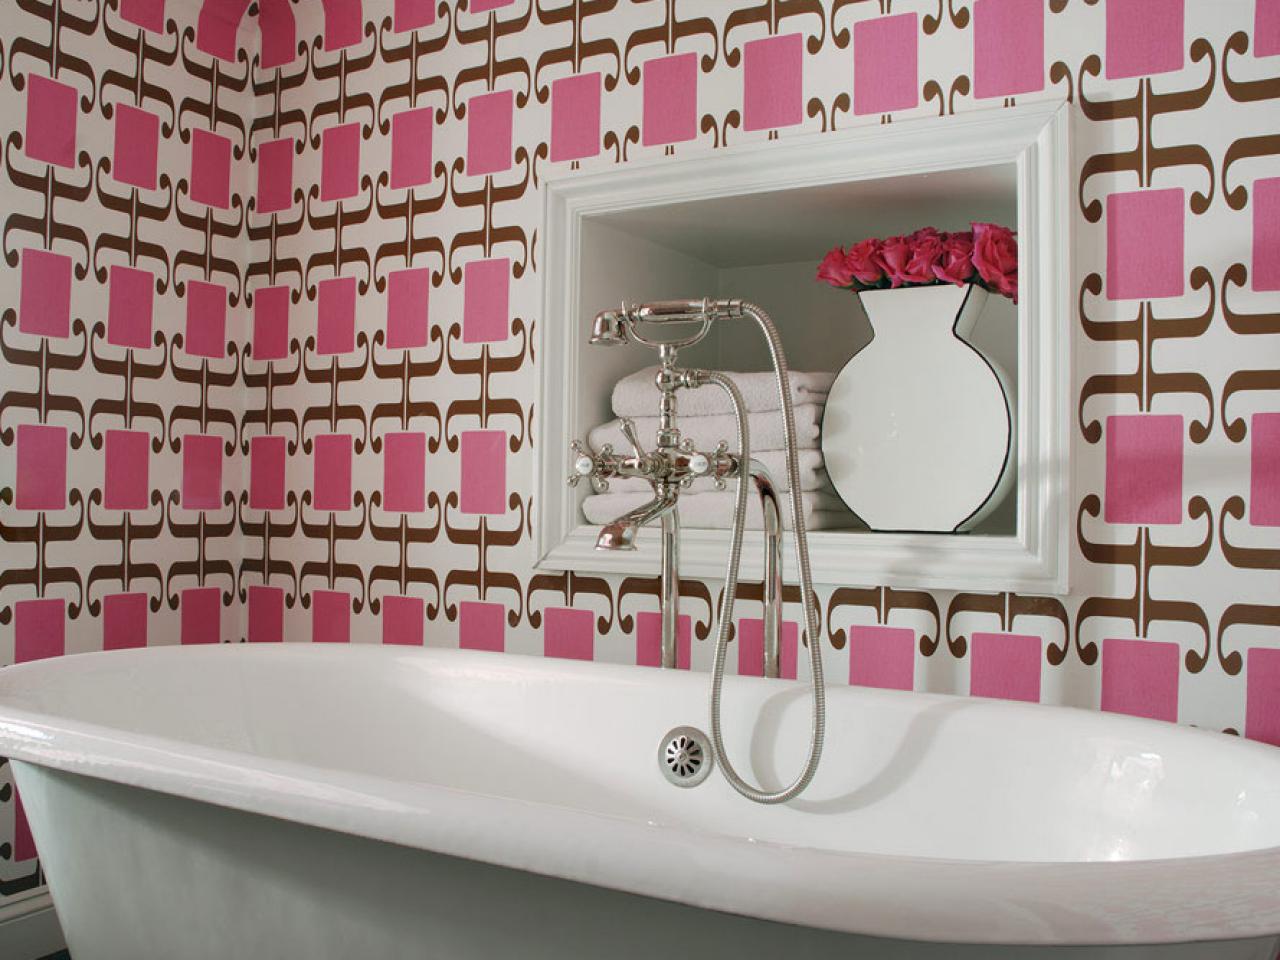 Original_Colorful-Bathrooms-Caldwell-Flake-Interior-Design-Pink-Wallpaper_s4x3.jpg.rend.hgtvcom.1280.960